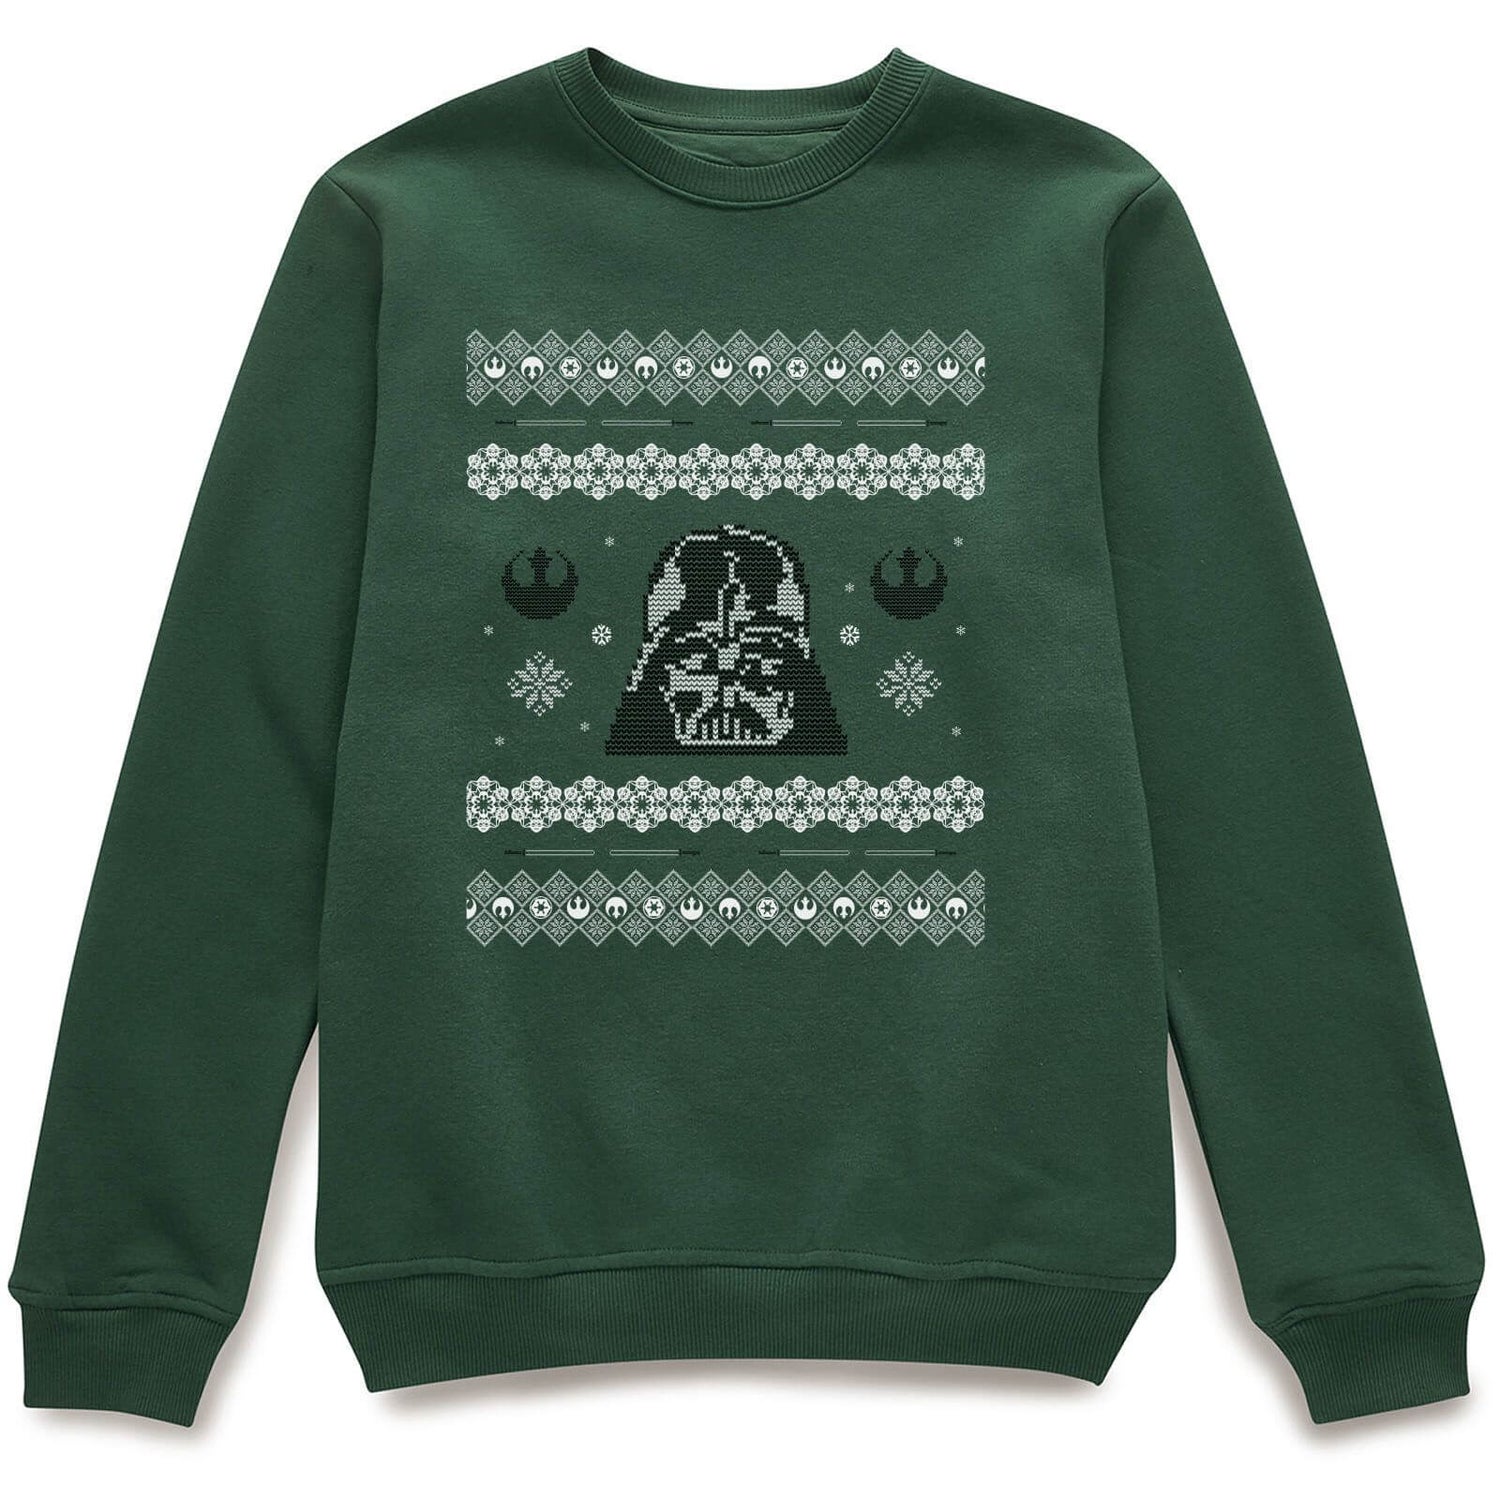 Star Wars Darth Vader Christmas Knit Green Christmas Jumper